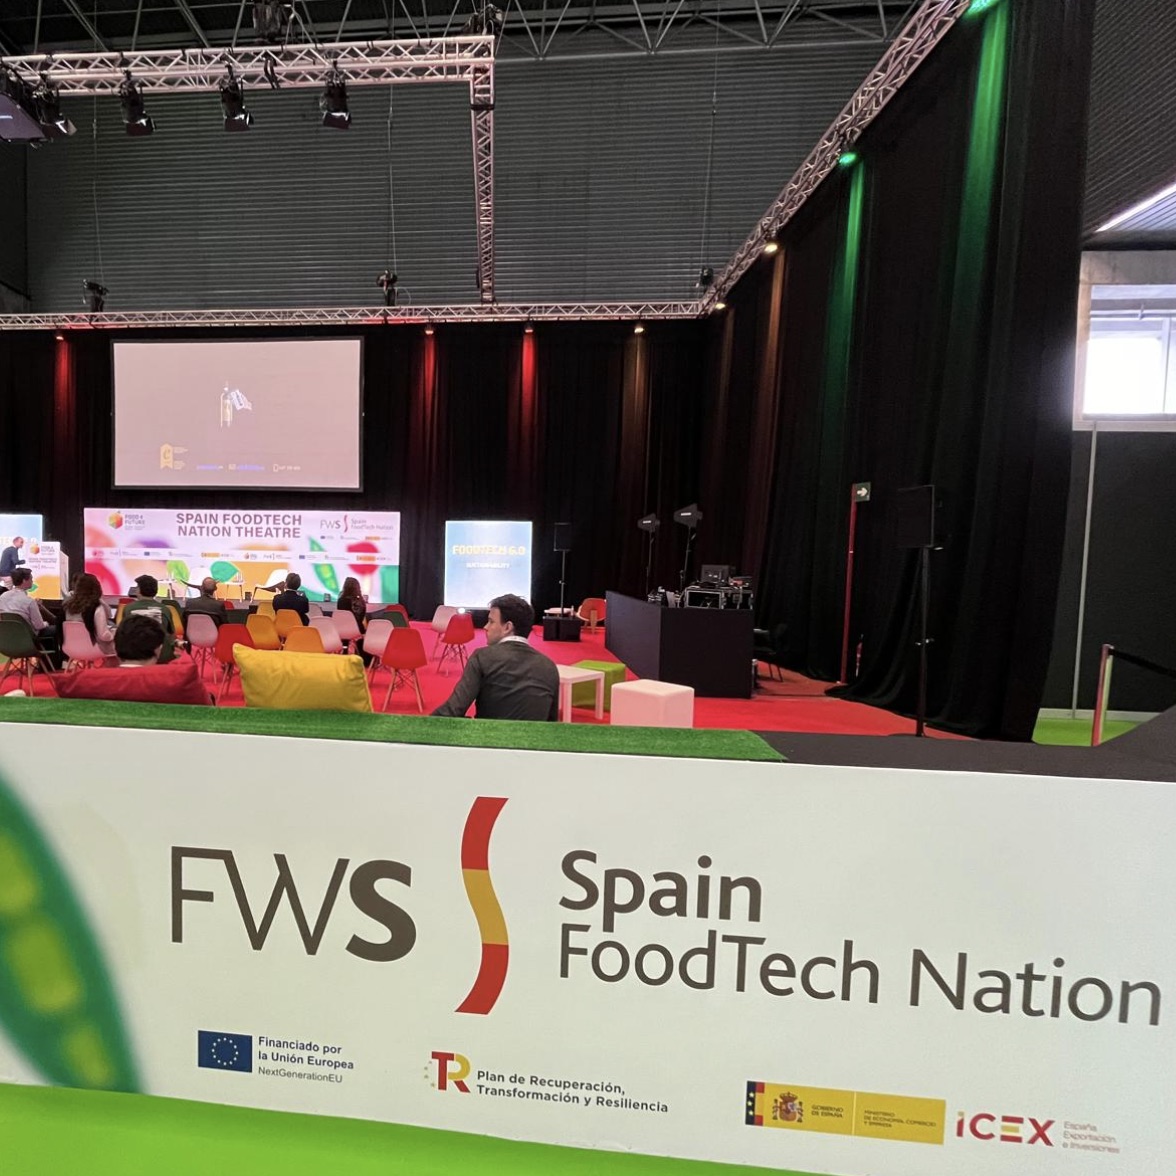 Spain Foodtech Nation and DESAFIA Foodtech Program at Food 4 Future, Bilbao